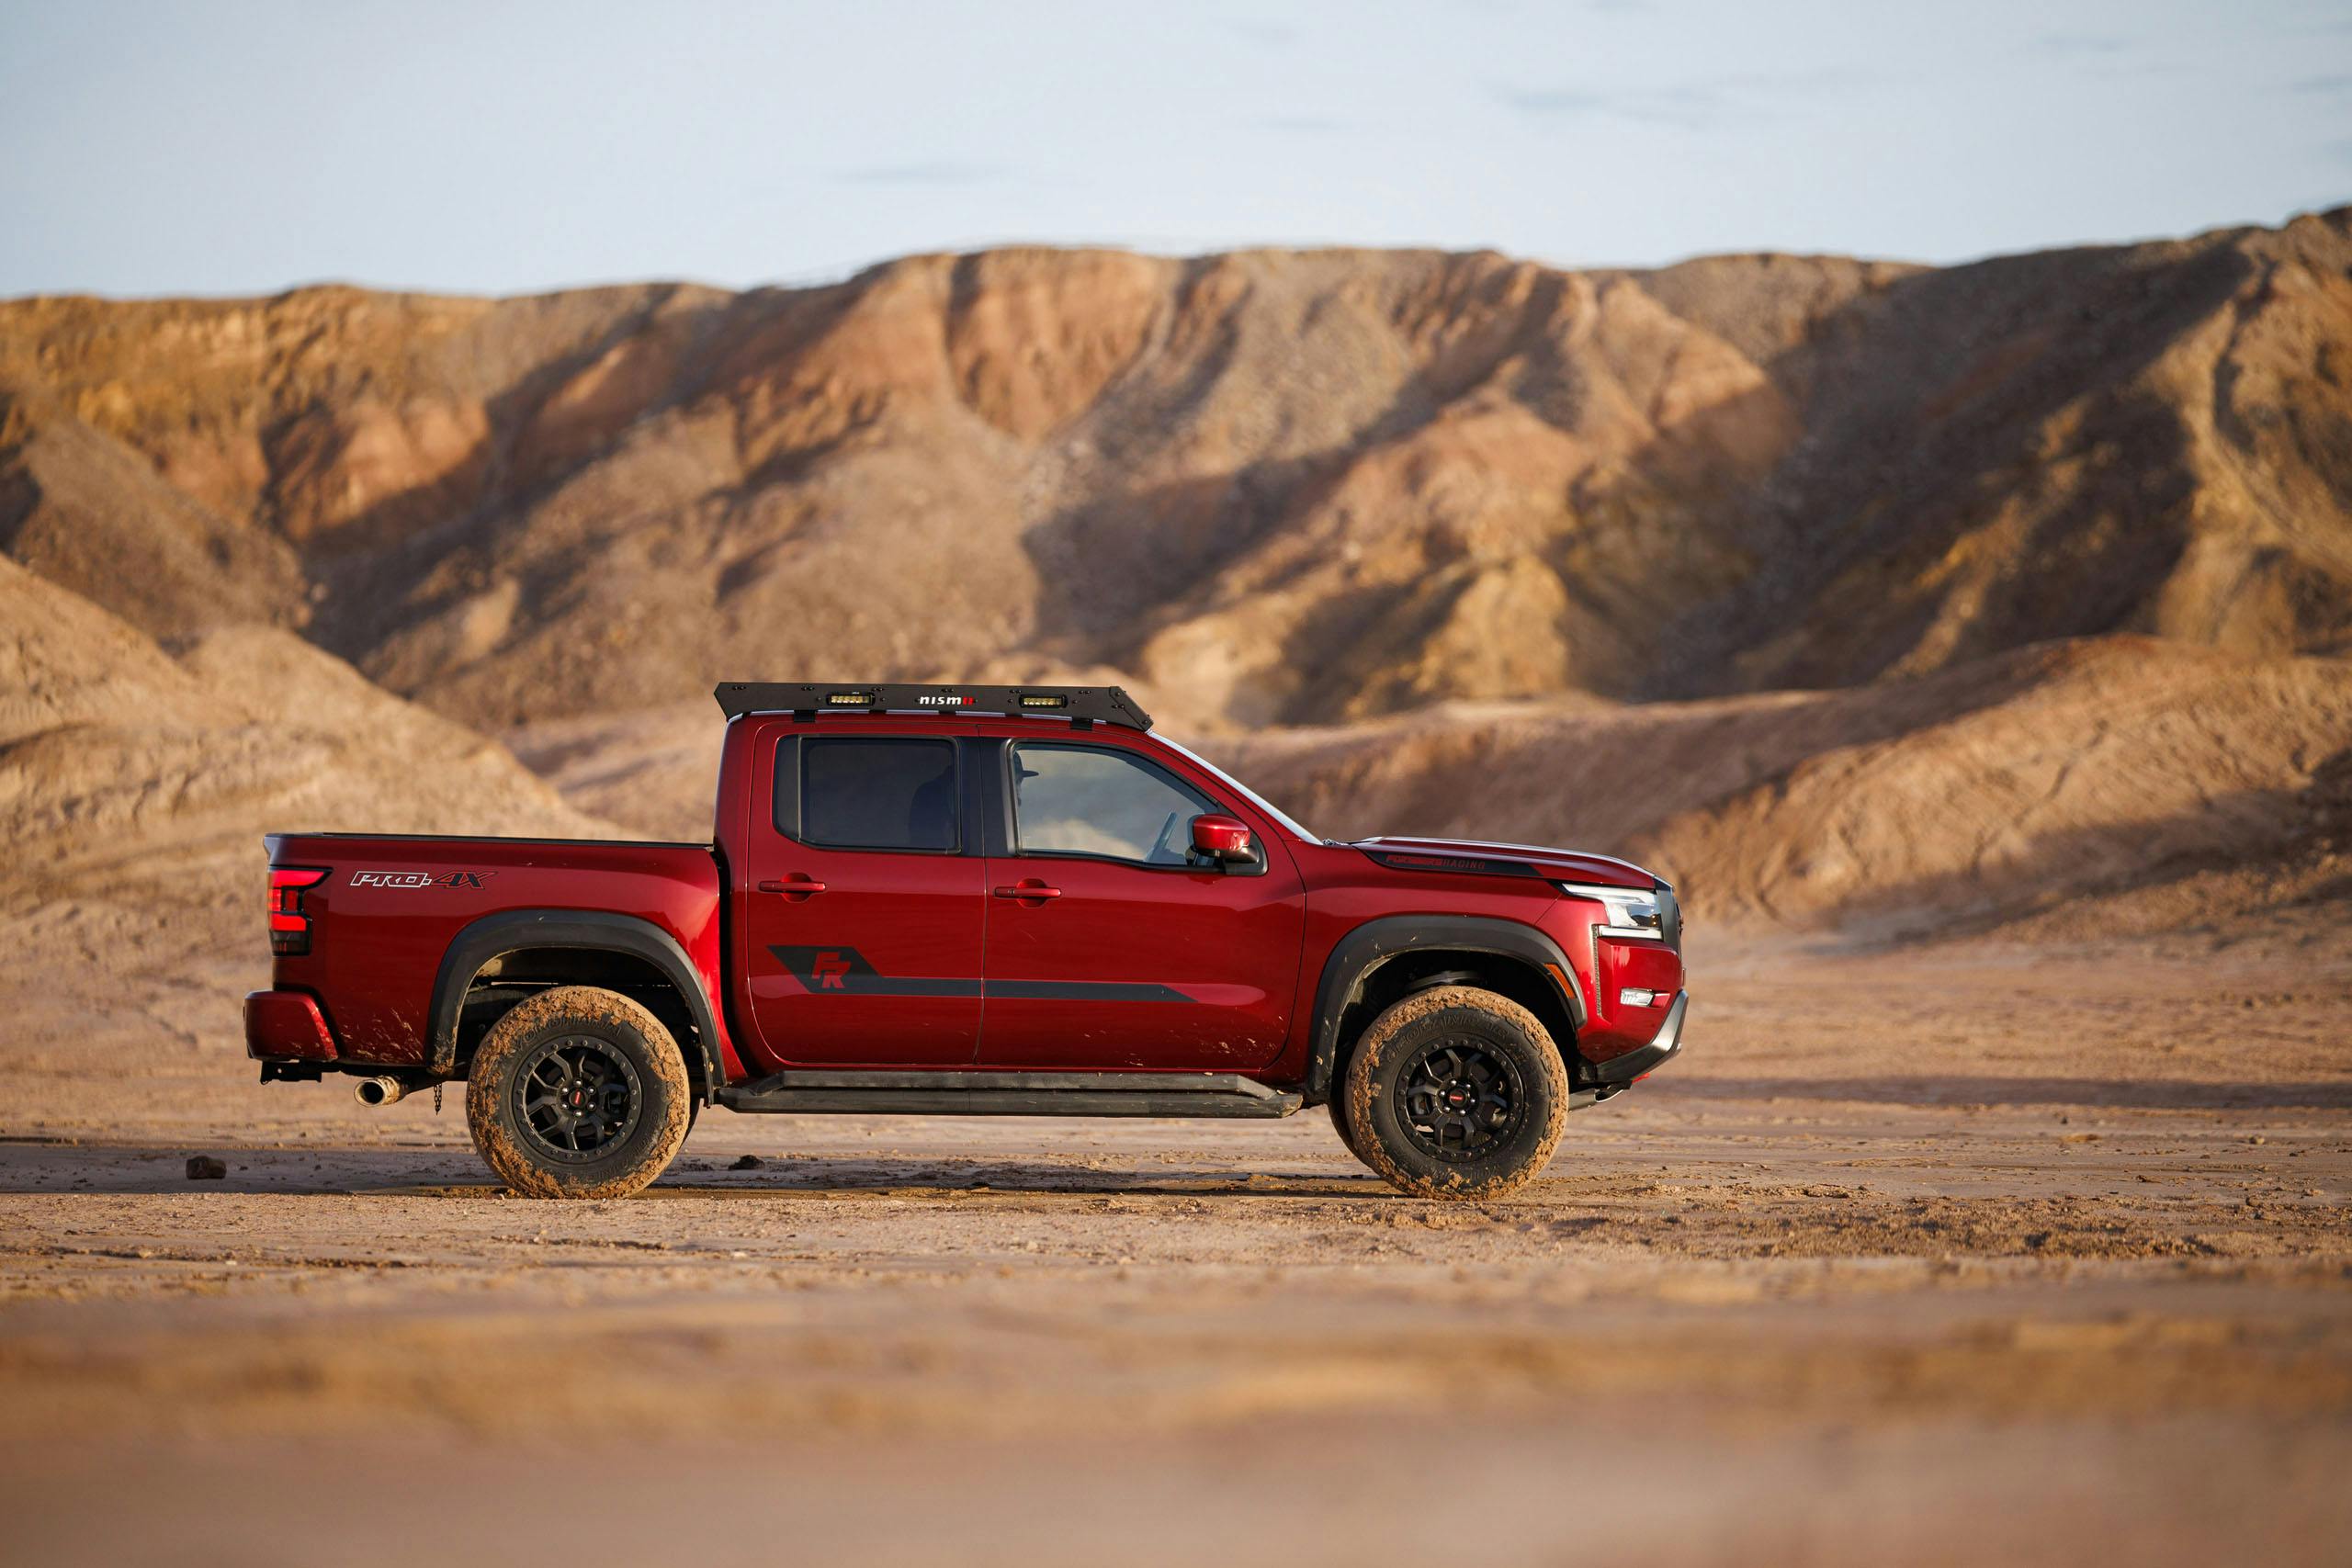 Nissan Frontier Forsberg Edition exterior demo truck side profile in desert